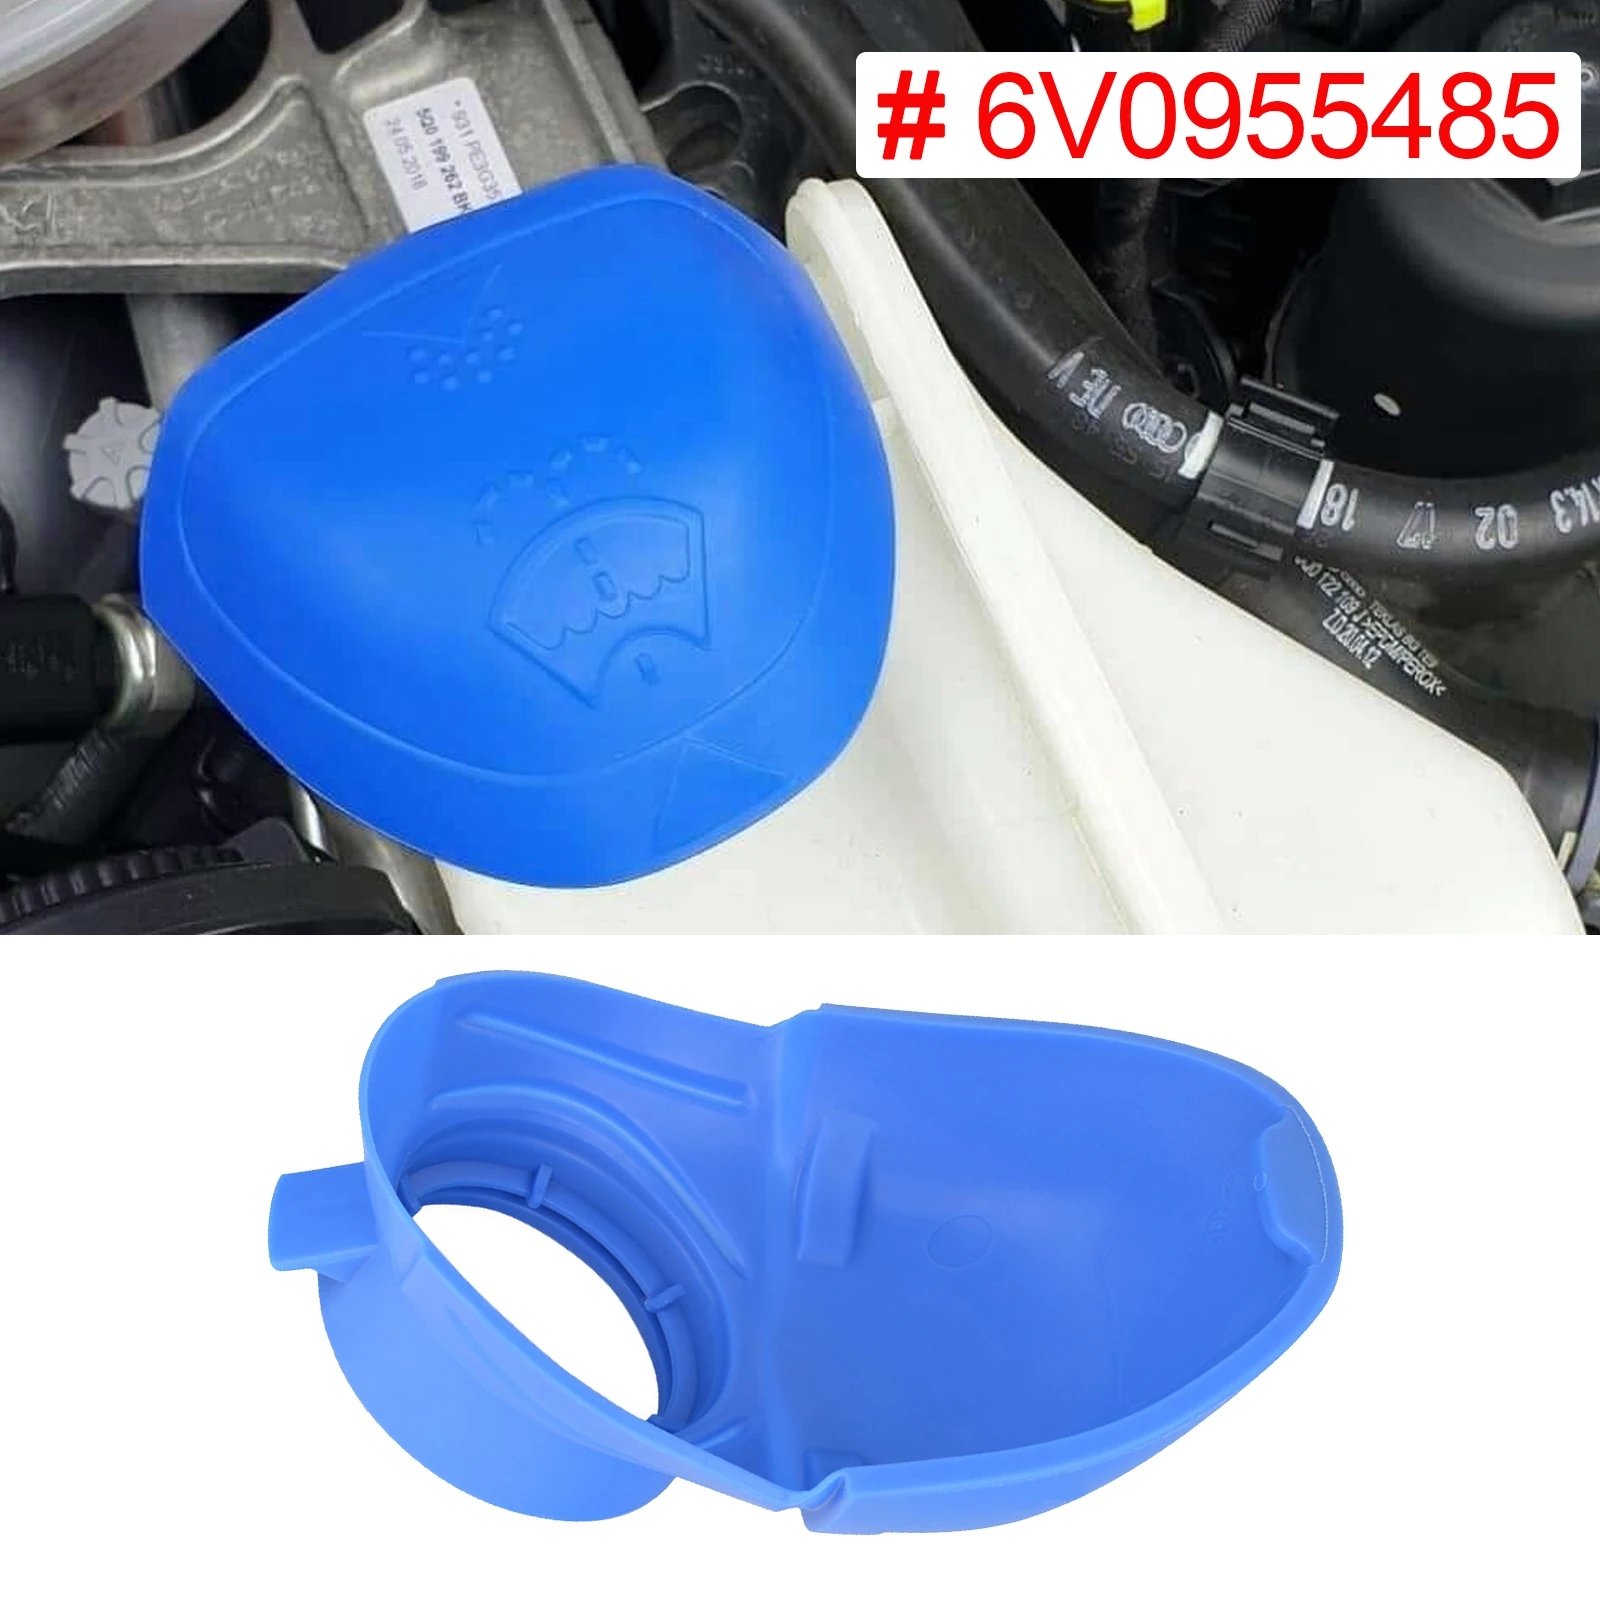 6V0955485 6V0 955 485 מגב נוזל שטיפה מאגר מיכל הבקבוק לכסות כובע המכסה פלסטיק כחול עבור פולקסווגן אאודי